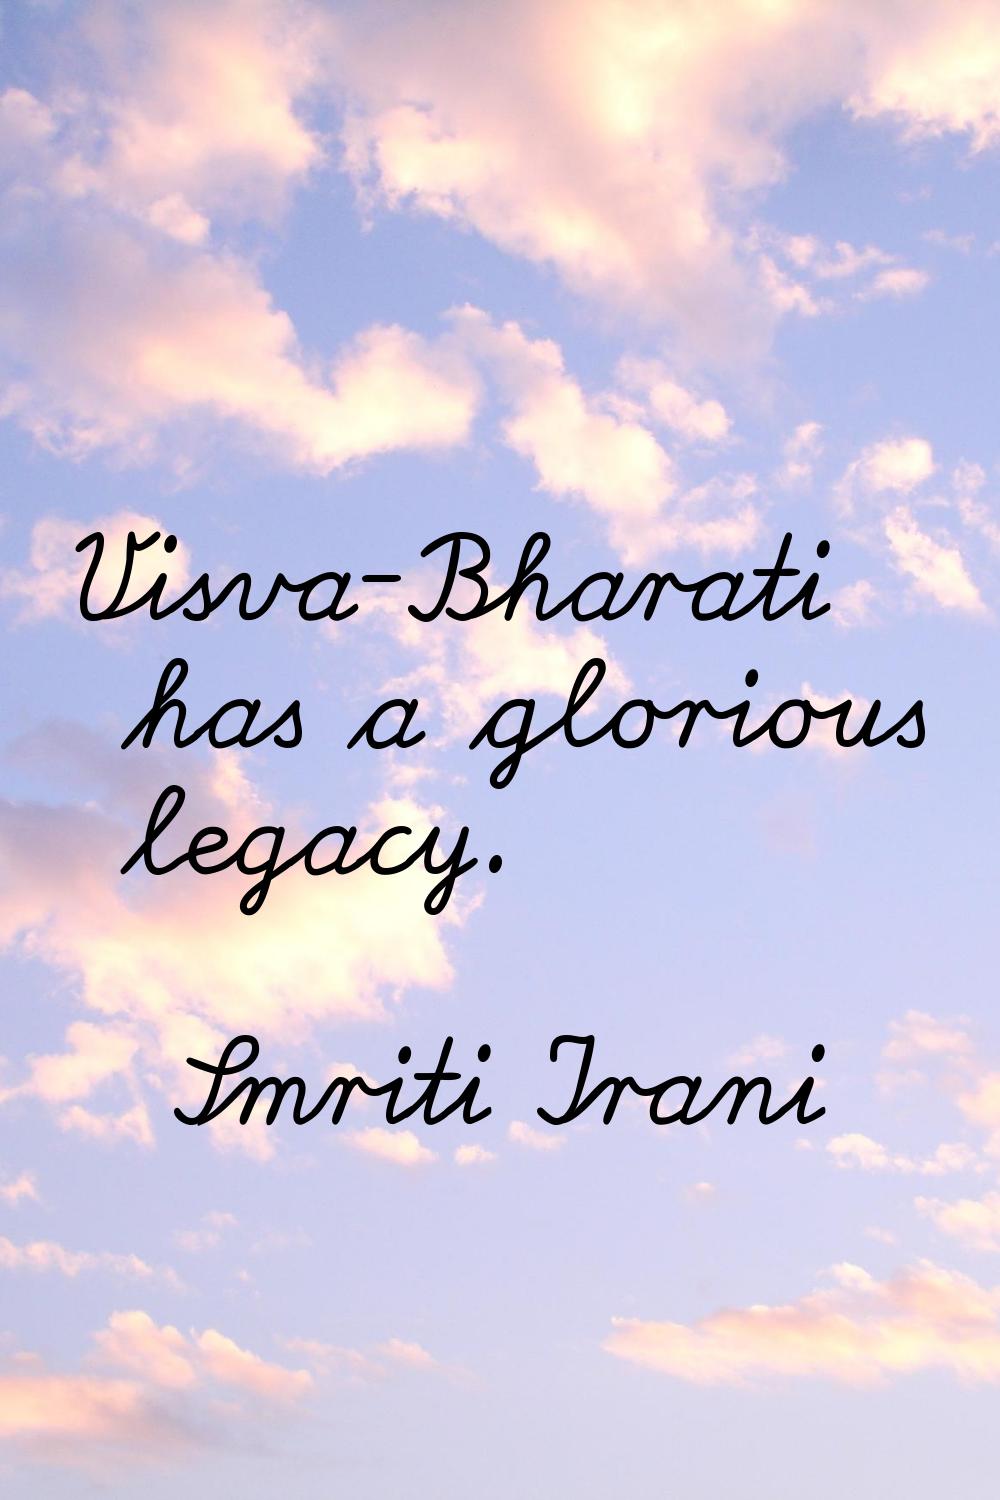 Visva-Bharati has a glorious legacy.